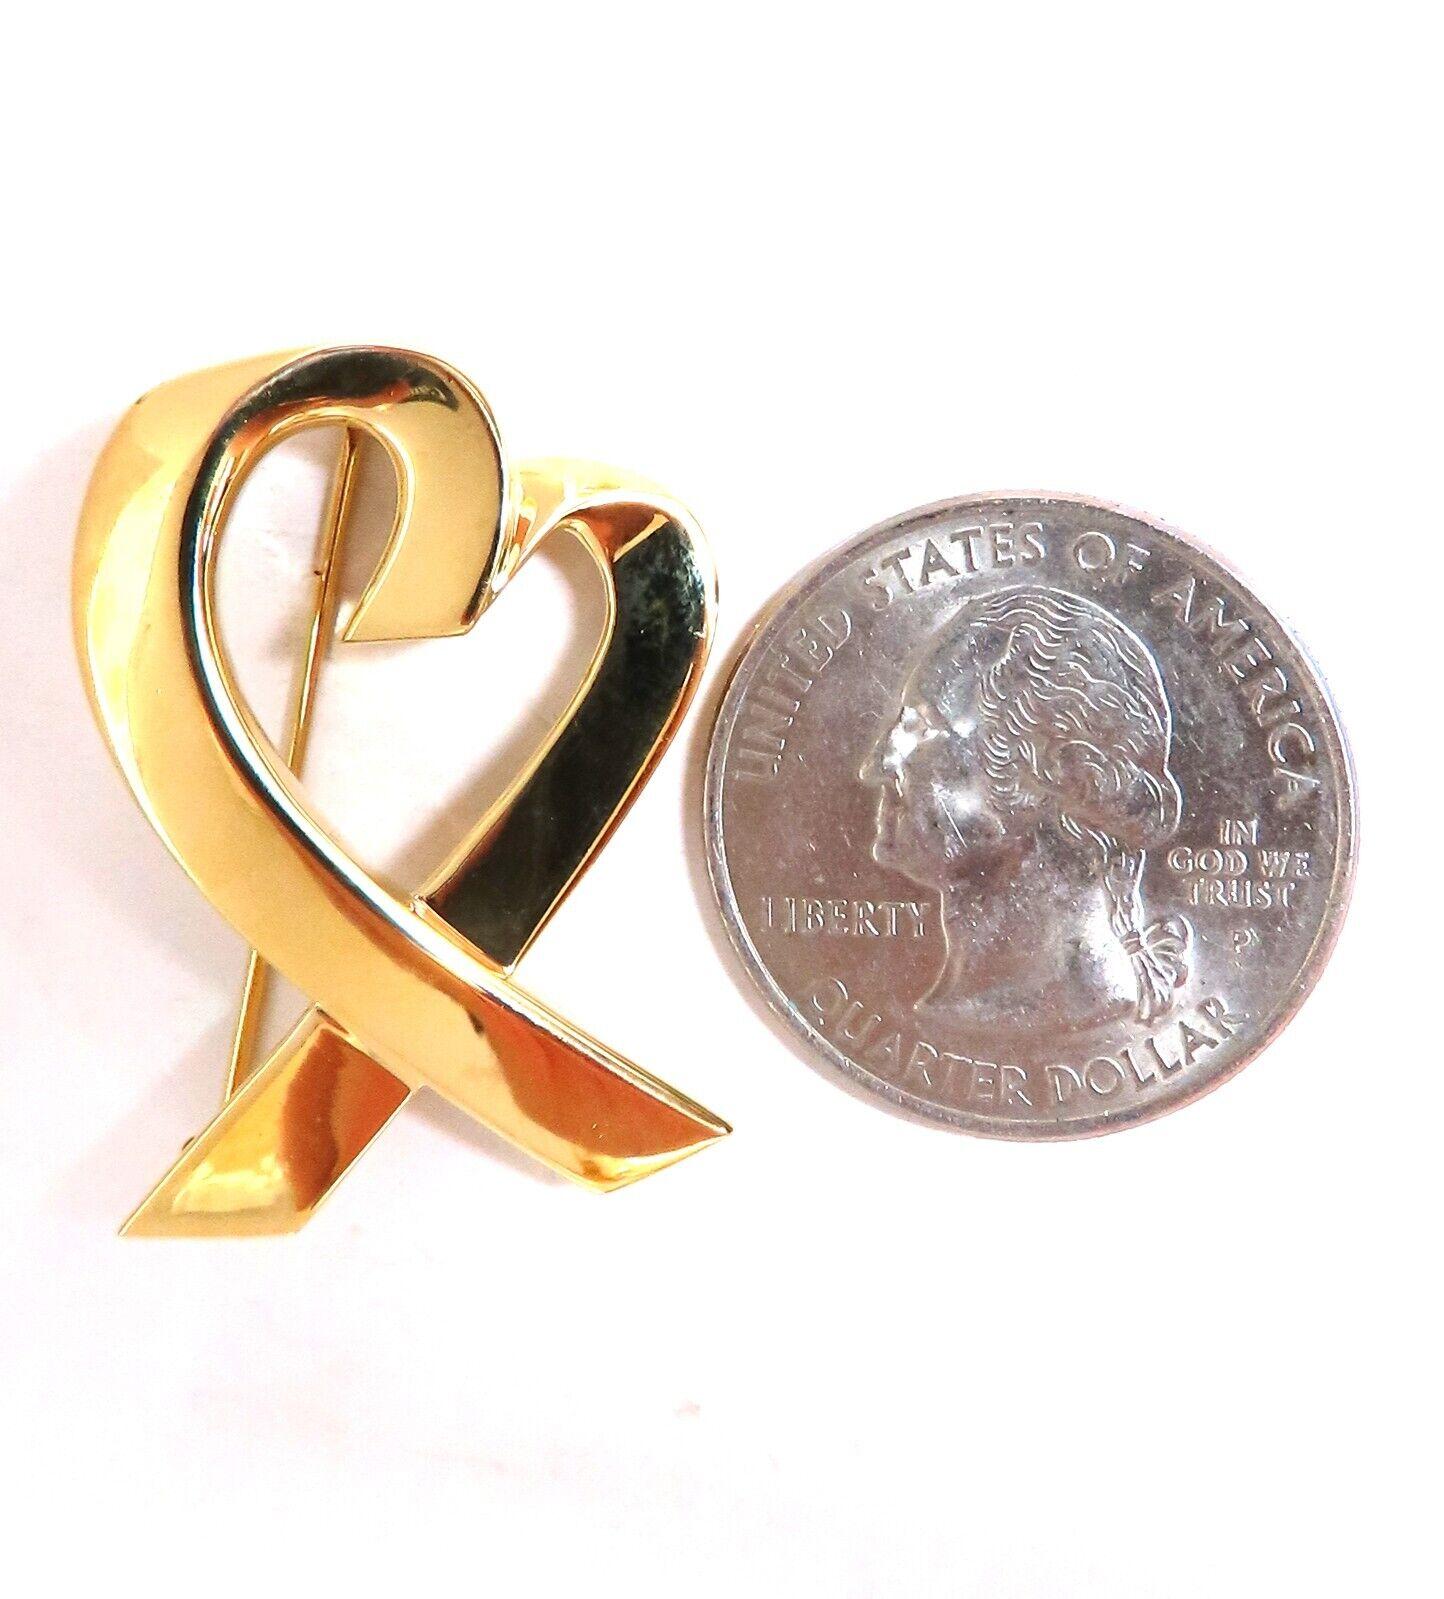 Designer Tiffany Heart Gold pin.

32 x 23mm

18kt. yellow gold 

9.6 grams